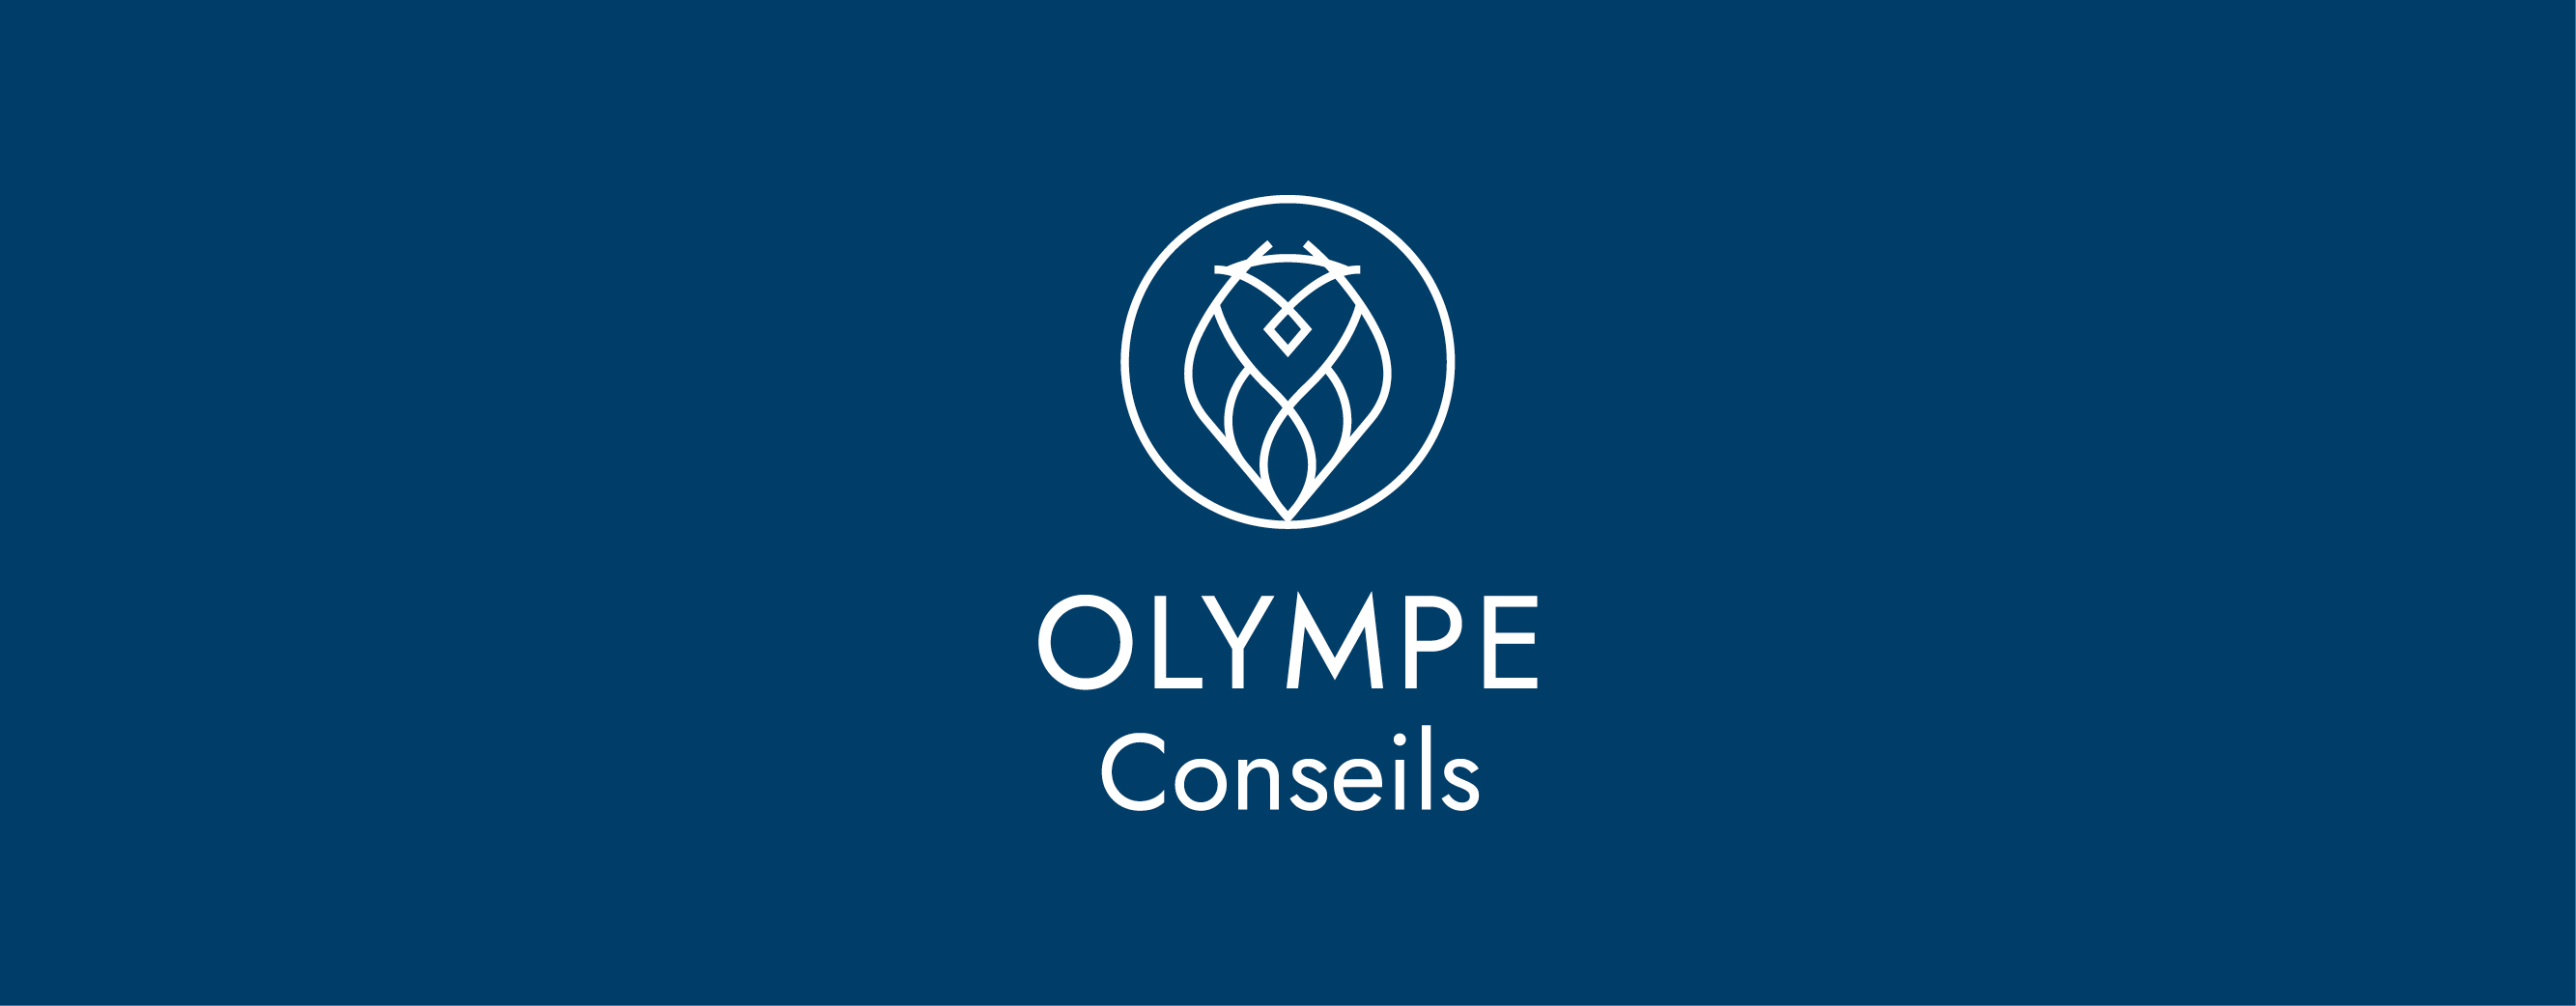 Olympe Conseils - slide1